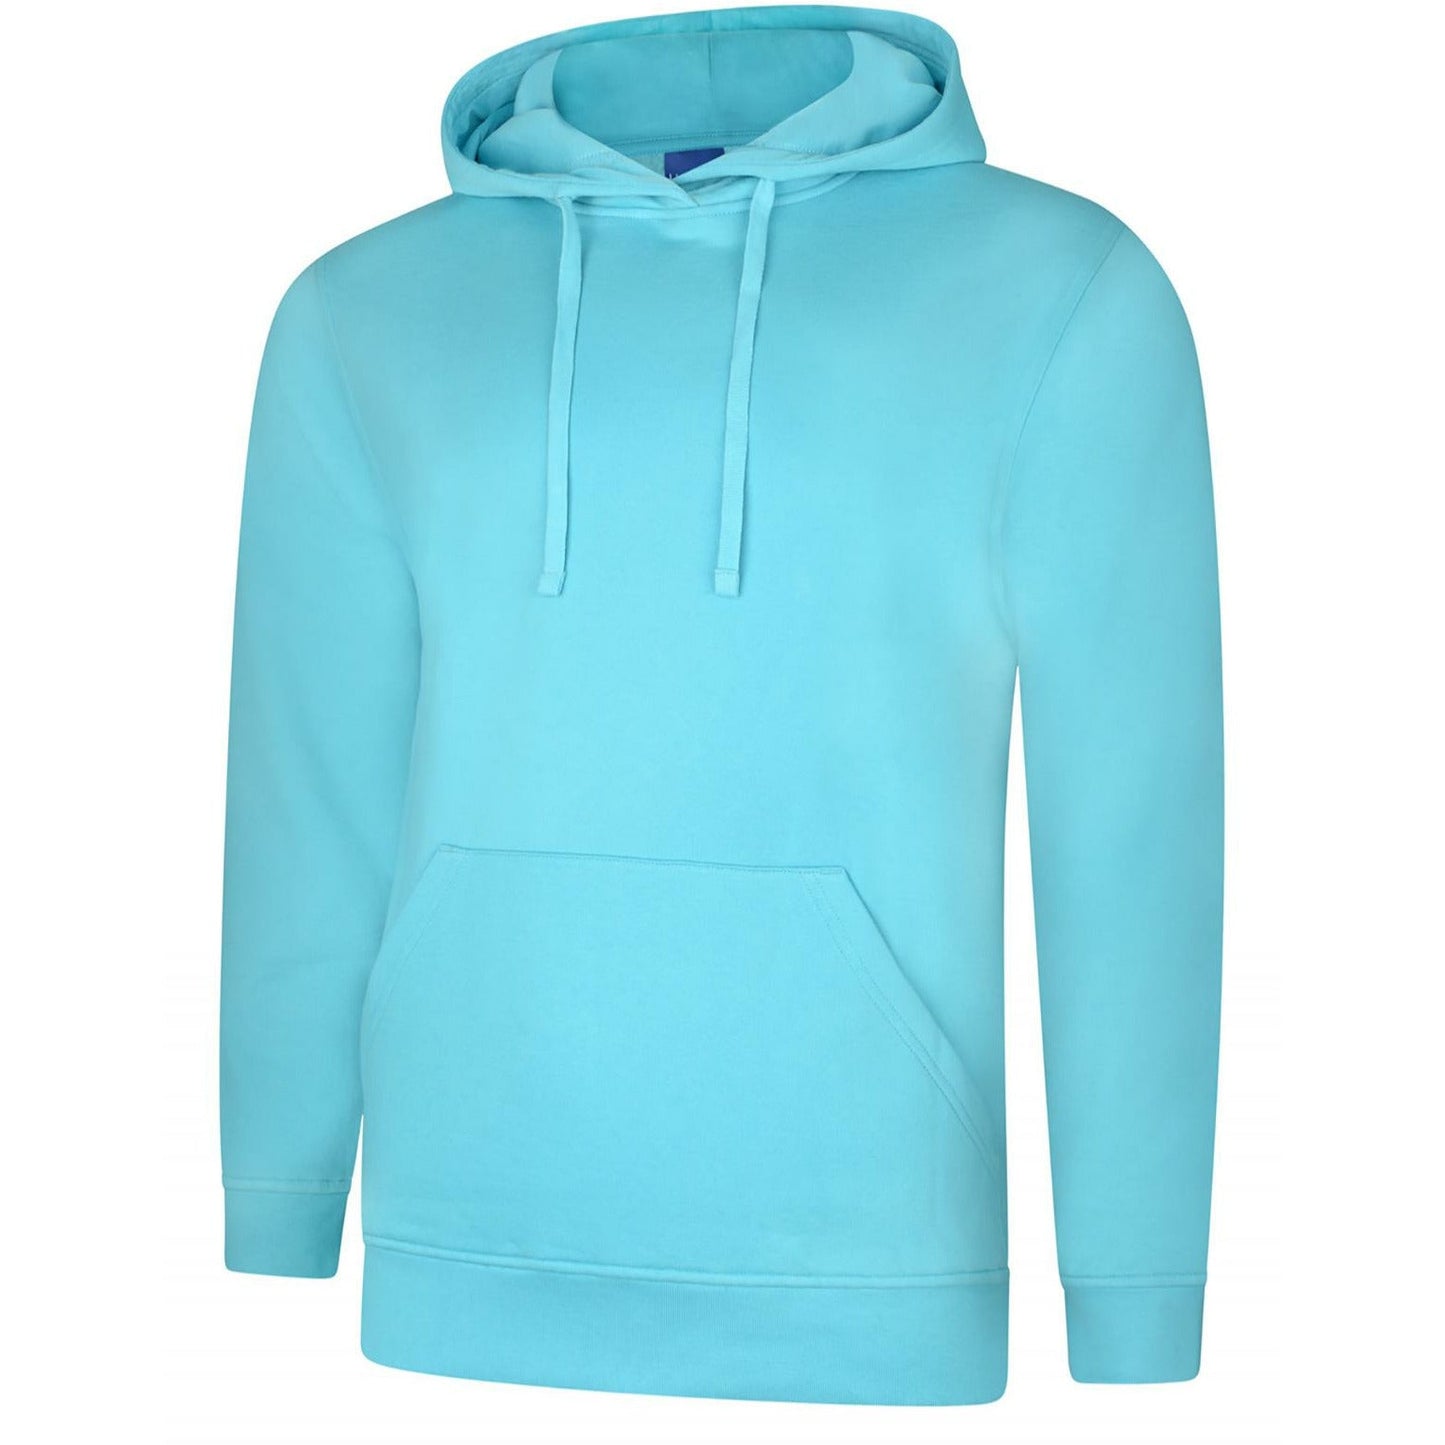 Deluxe Hooded Sweatshirt (L - 2XL) Turquoise 